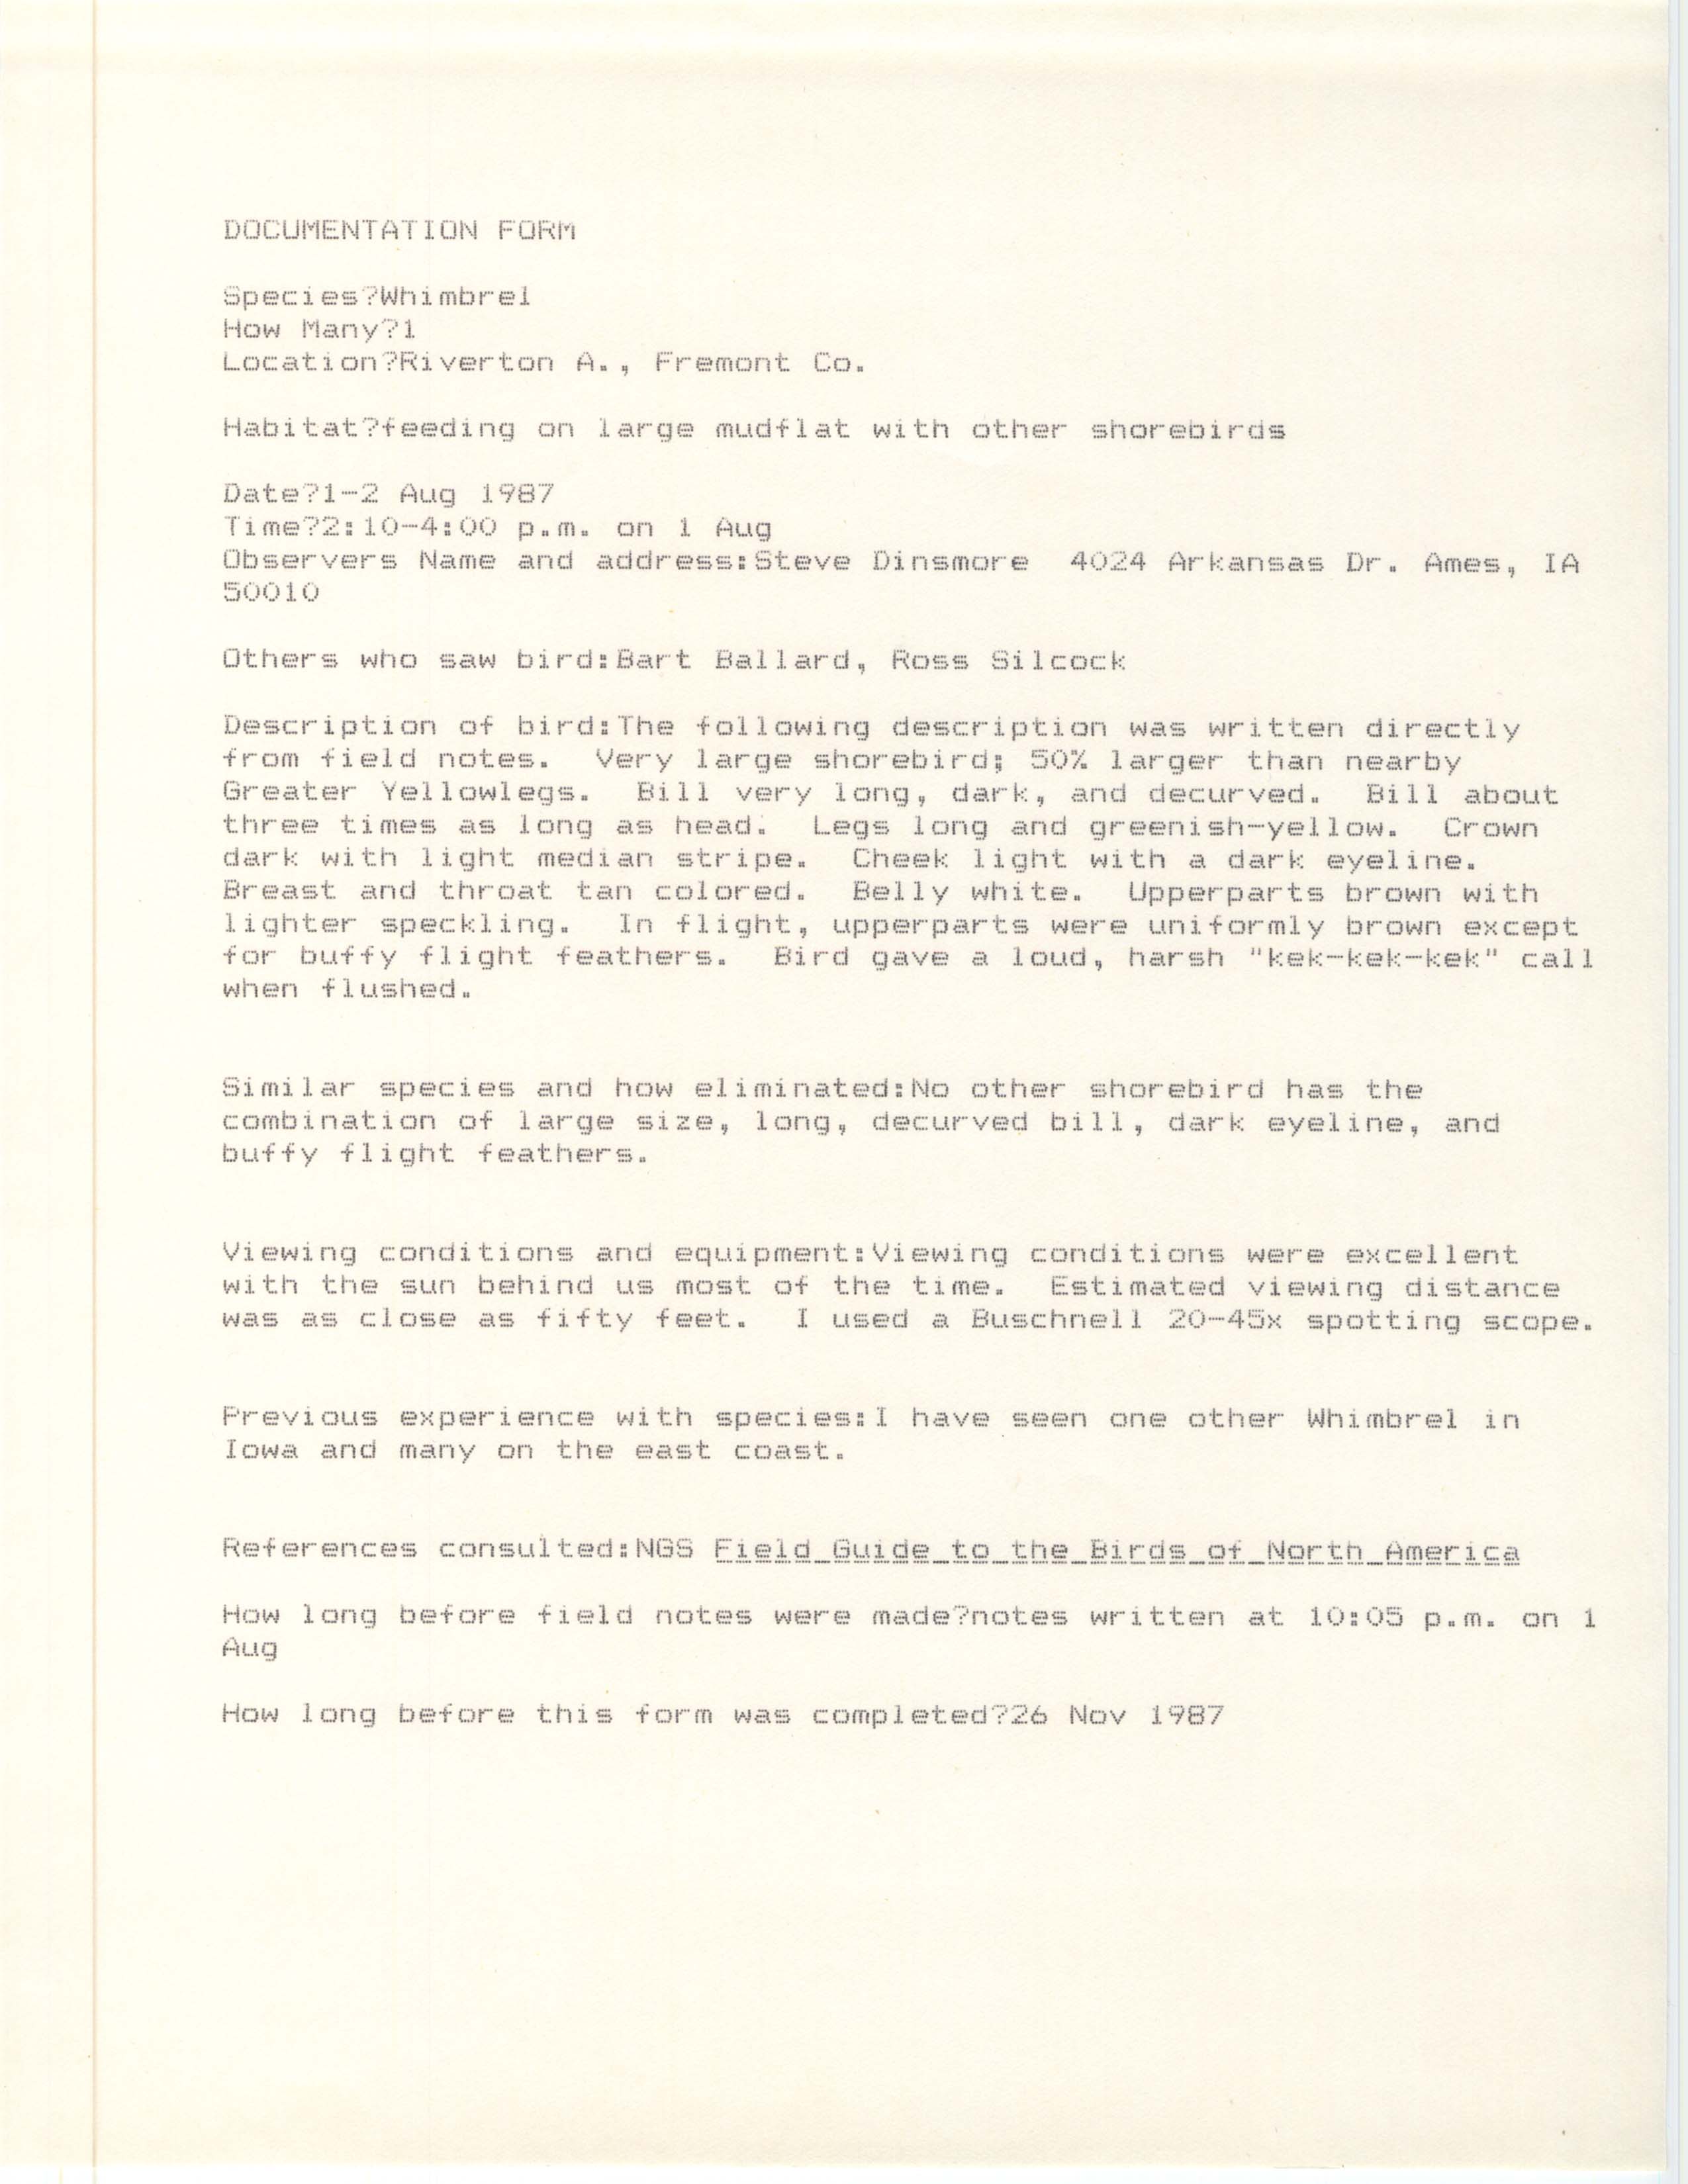 Rare bird documentation form for Whimbrel at Riverton Area, 1987